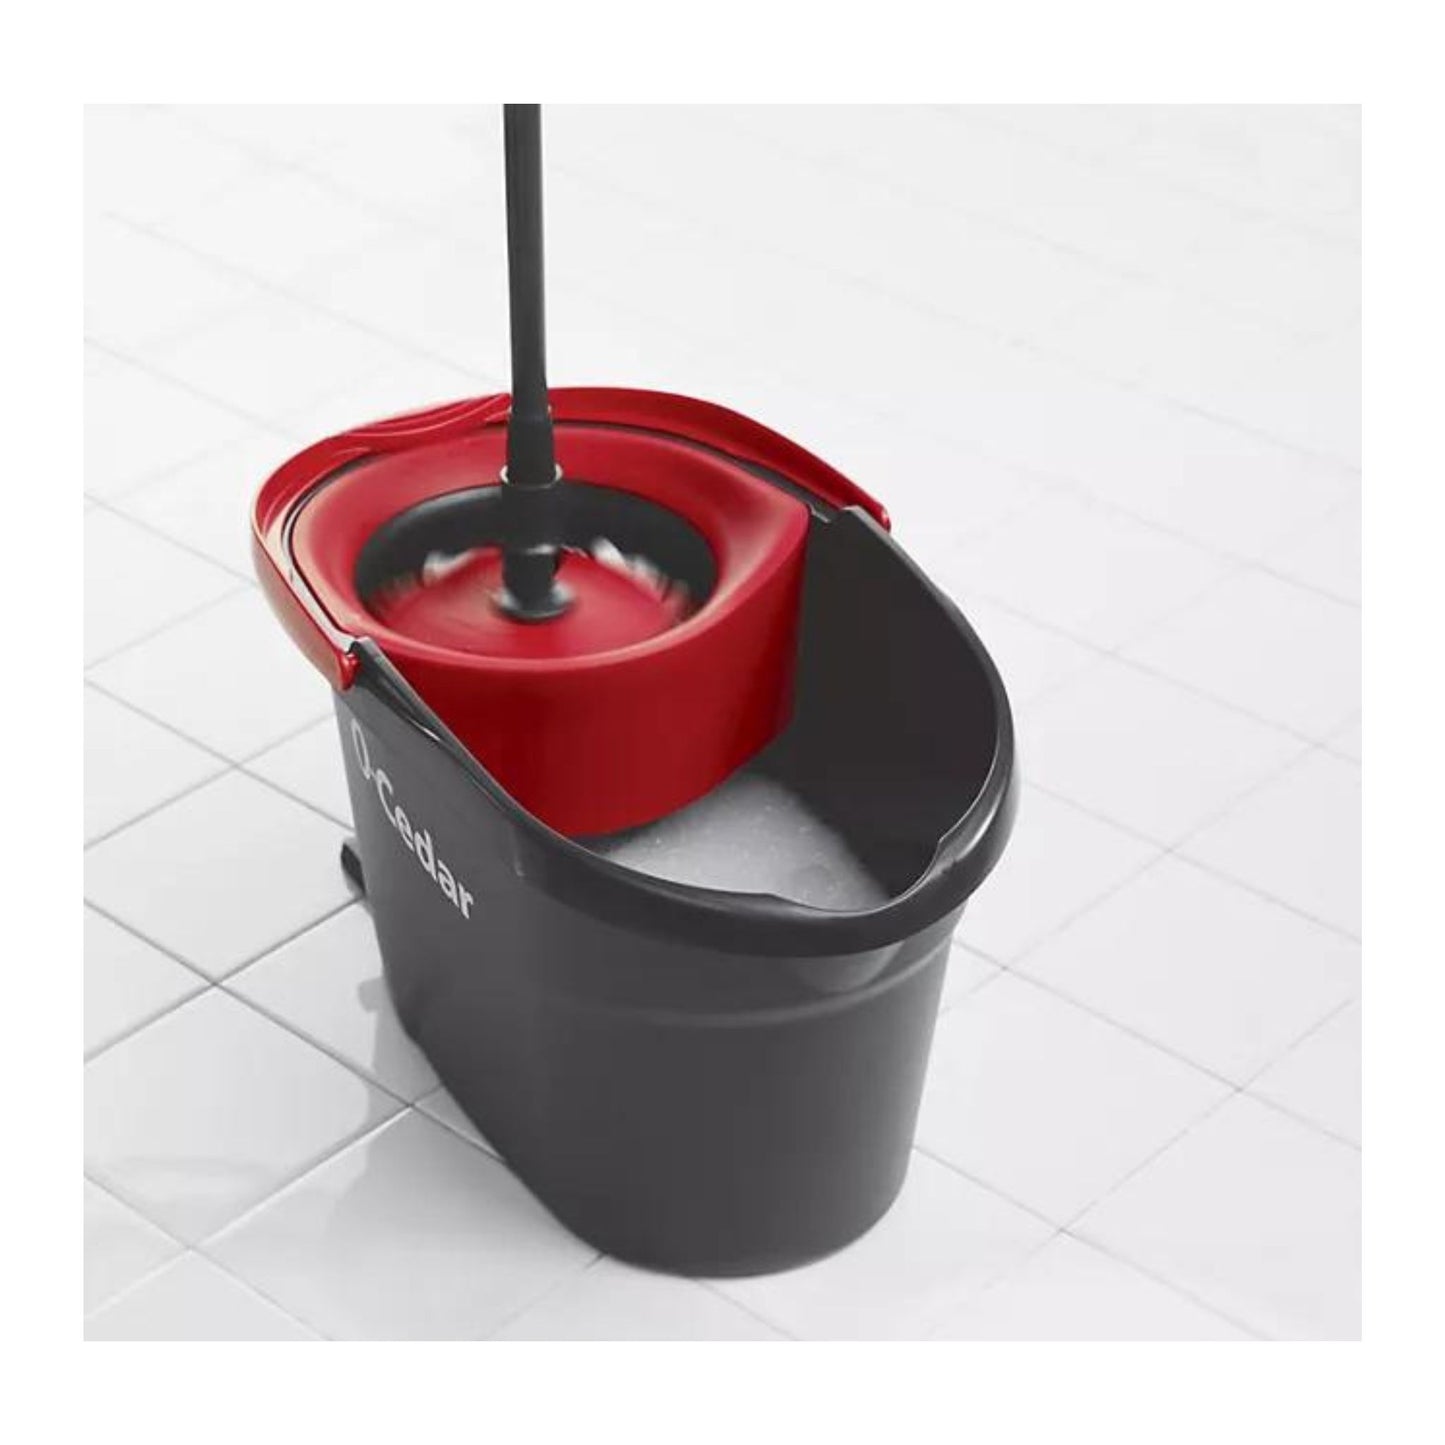 O-Cedar Spin Mop & Bucket System with 3 Extra Refills